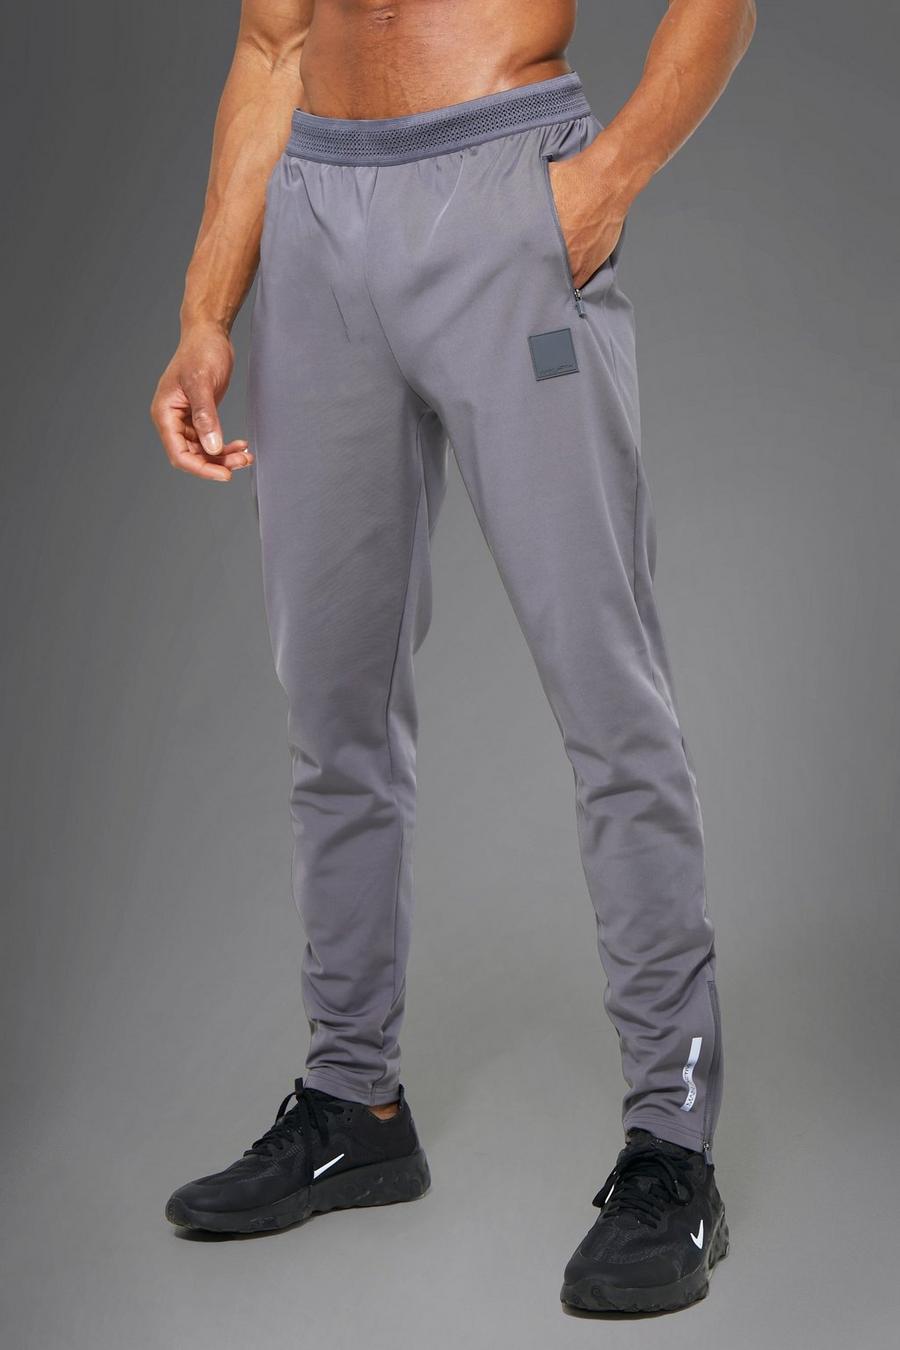 Charcoal gris מכנסי ריצה ספורטיביים לאימונים עם כיתוב Man image number 1